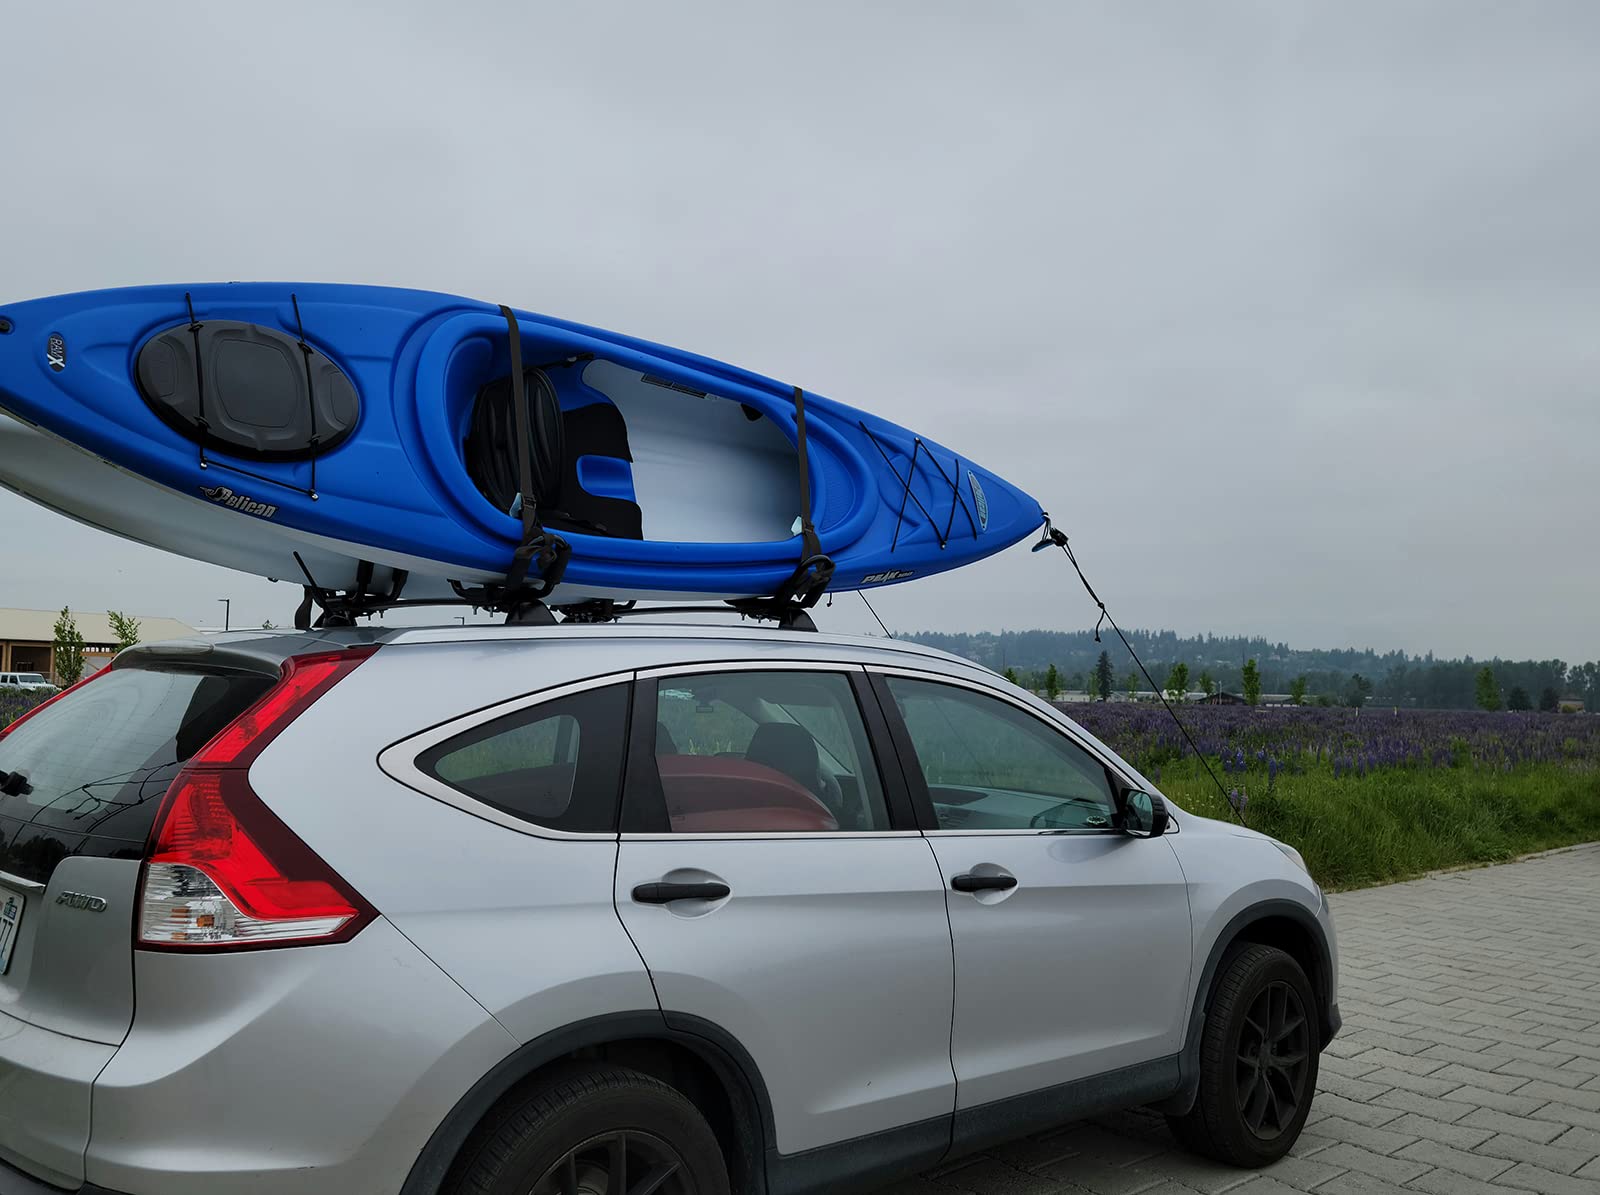 J-bar Kayak roof Rack for Cars - Universal Kayak & Canoe car Racks - Roof Rack for Canoe Surf Board Mount on SUV, Car and Truck Crossbar (1 Pair)